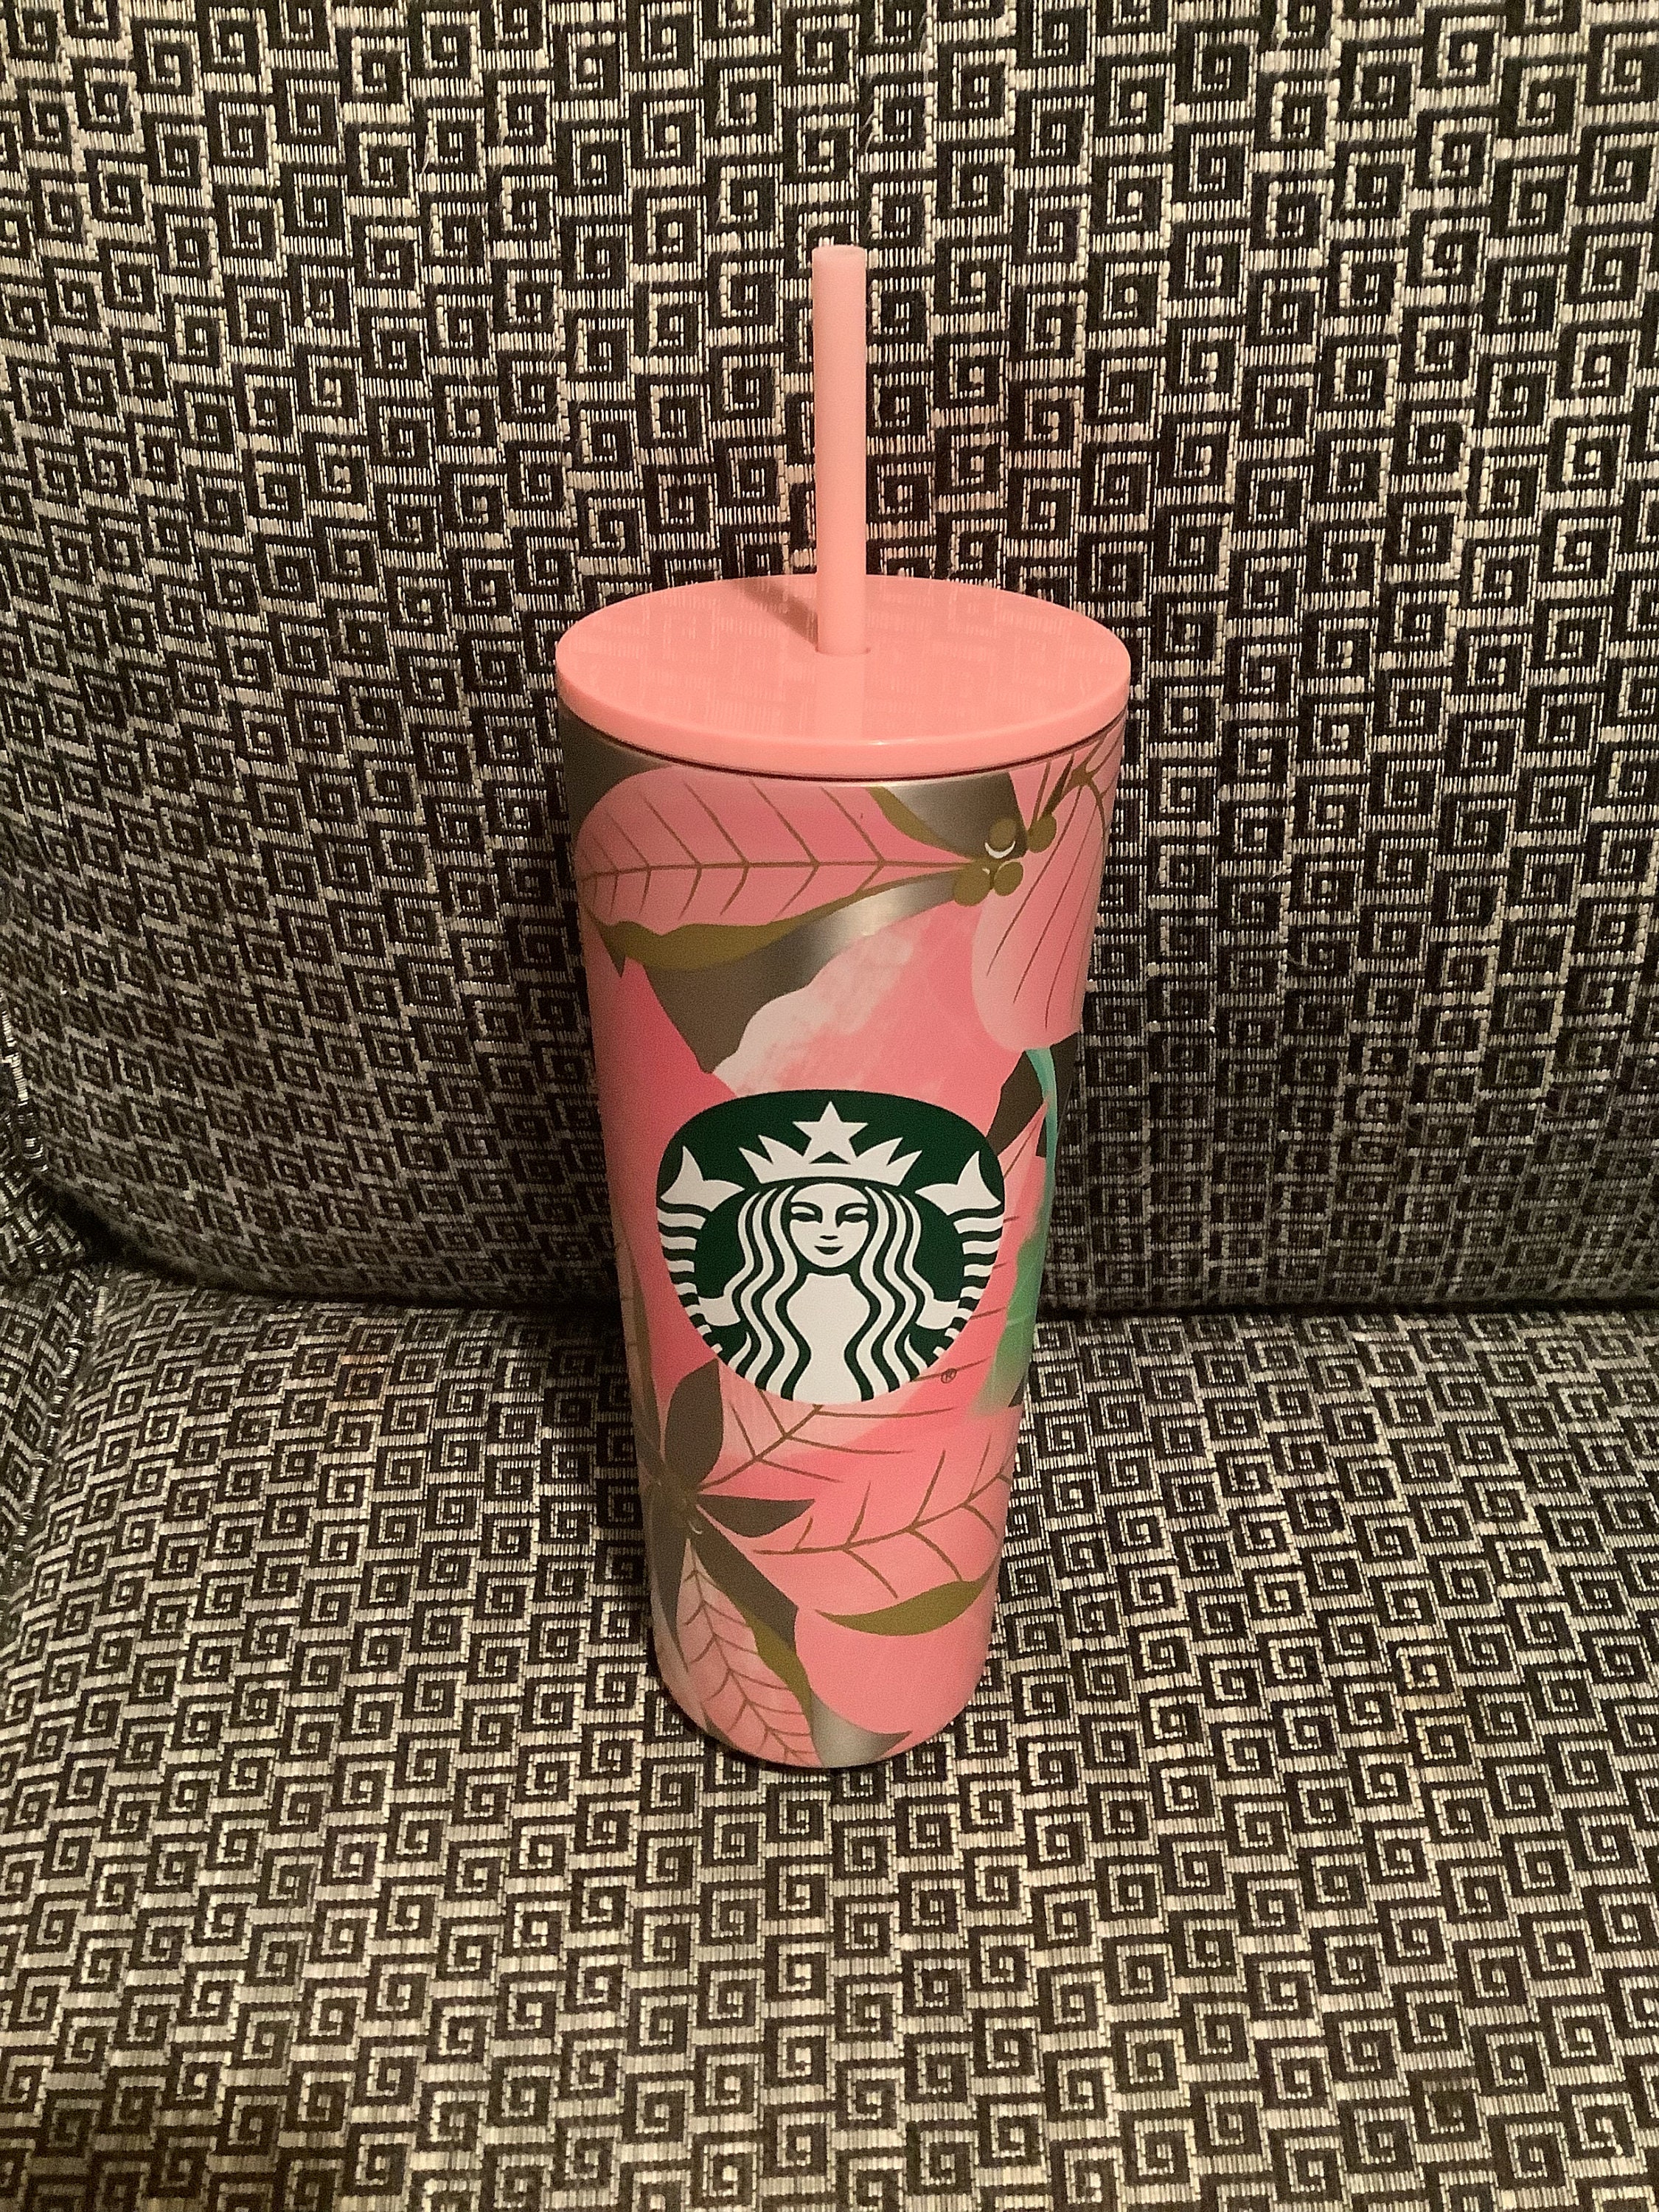 Starbucks Holiday 2022 Poinsettia Venti Tumbler + Flower Straw Topper NEW!